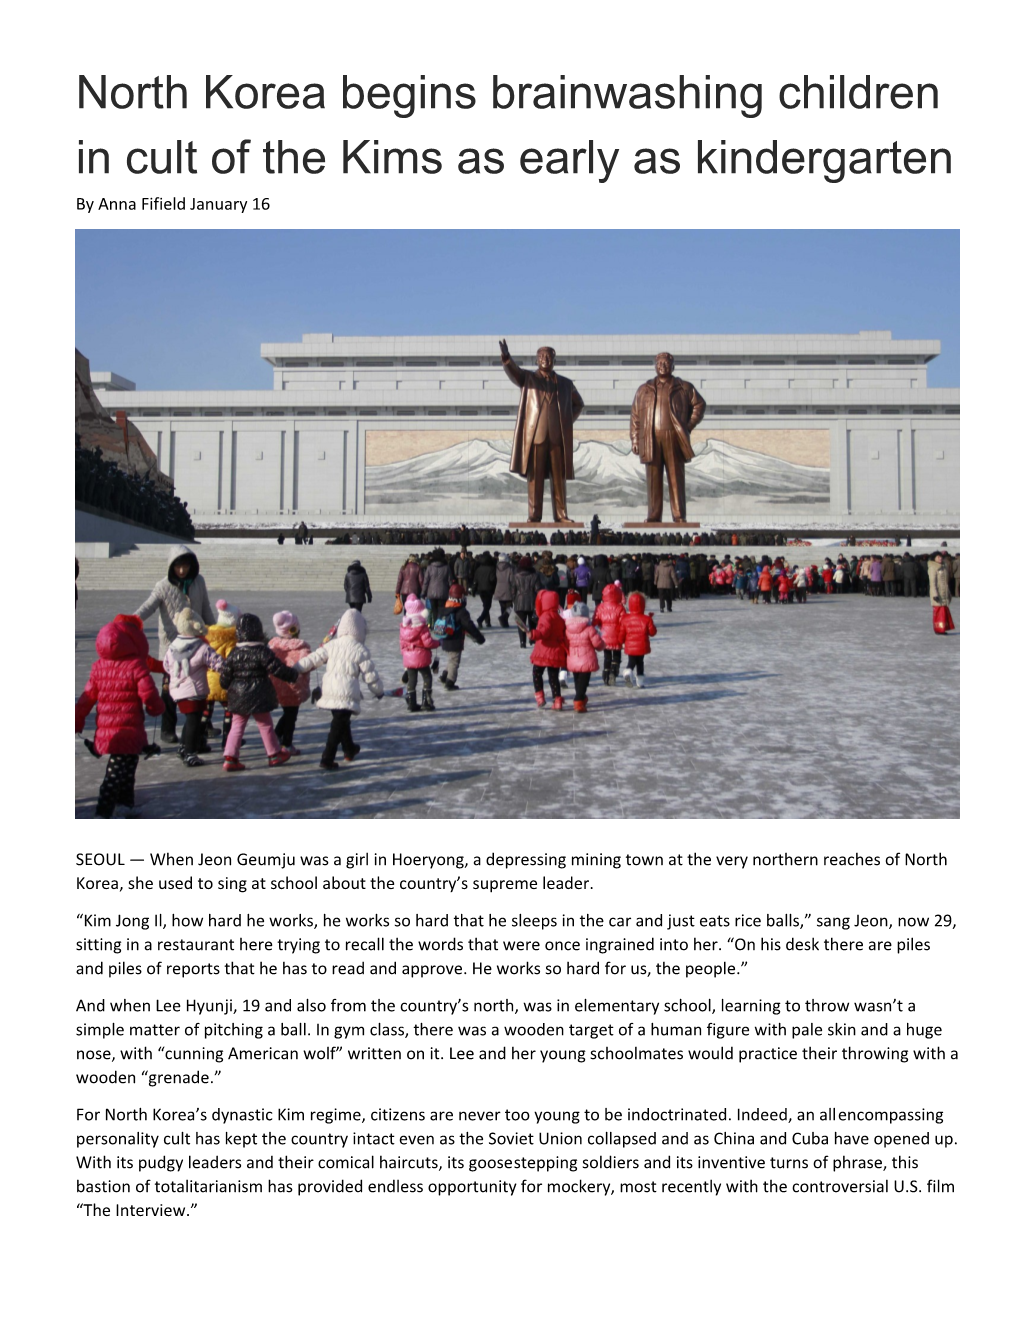 North Korea Begins Brainwashing Children in Cult of the Kims As Early As Kindergarten